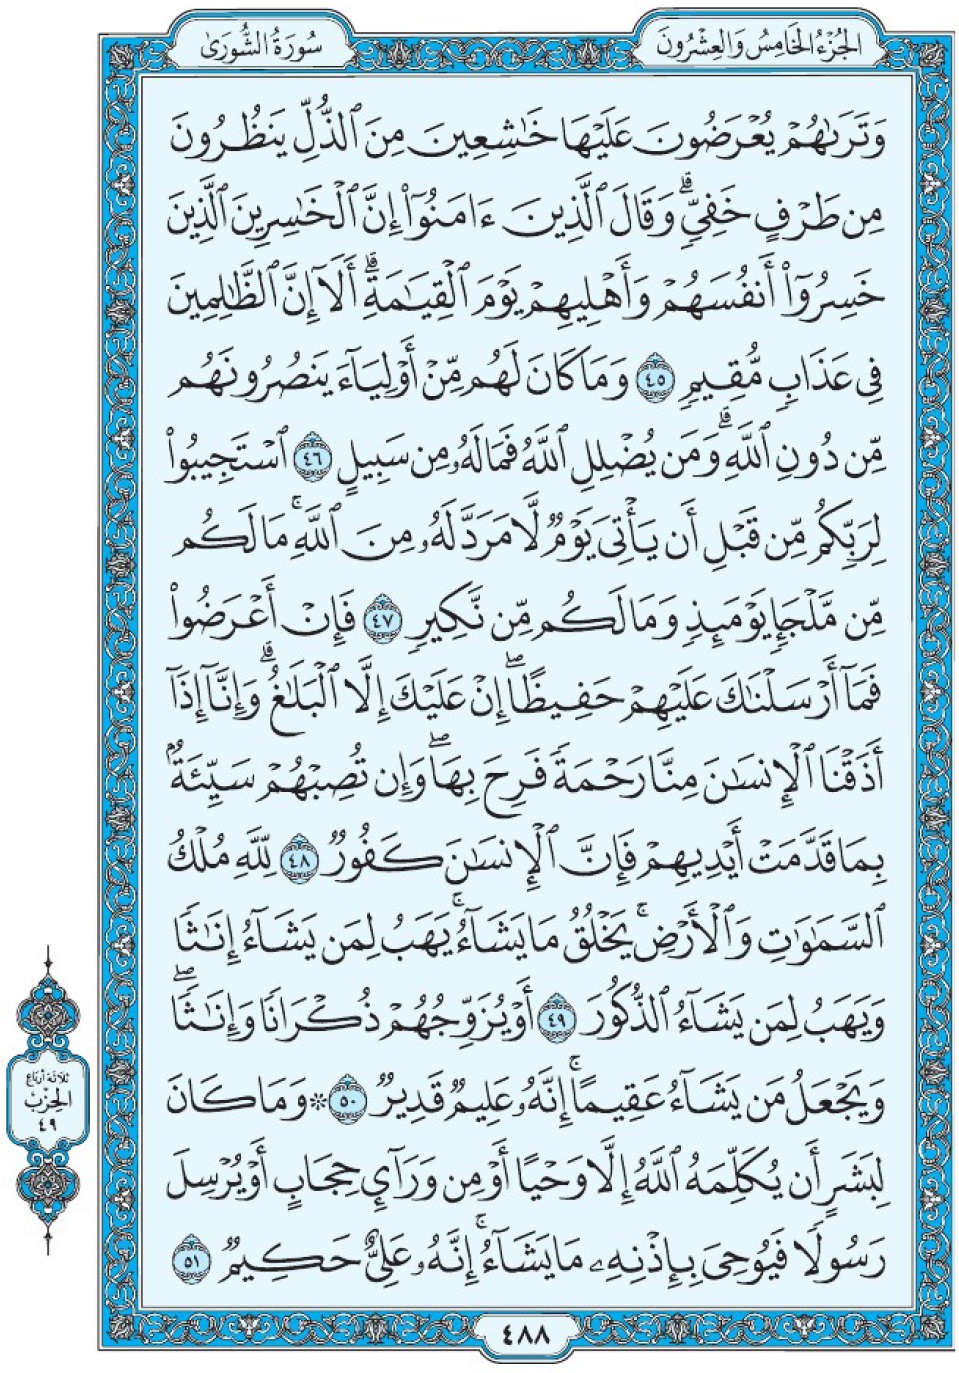 Коран Мединский мусхаф страница 488, Ащ-Щура, аят 45-51